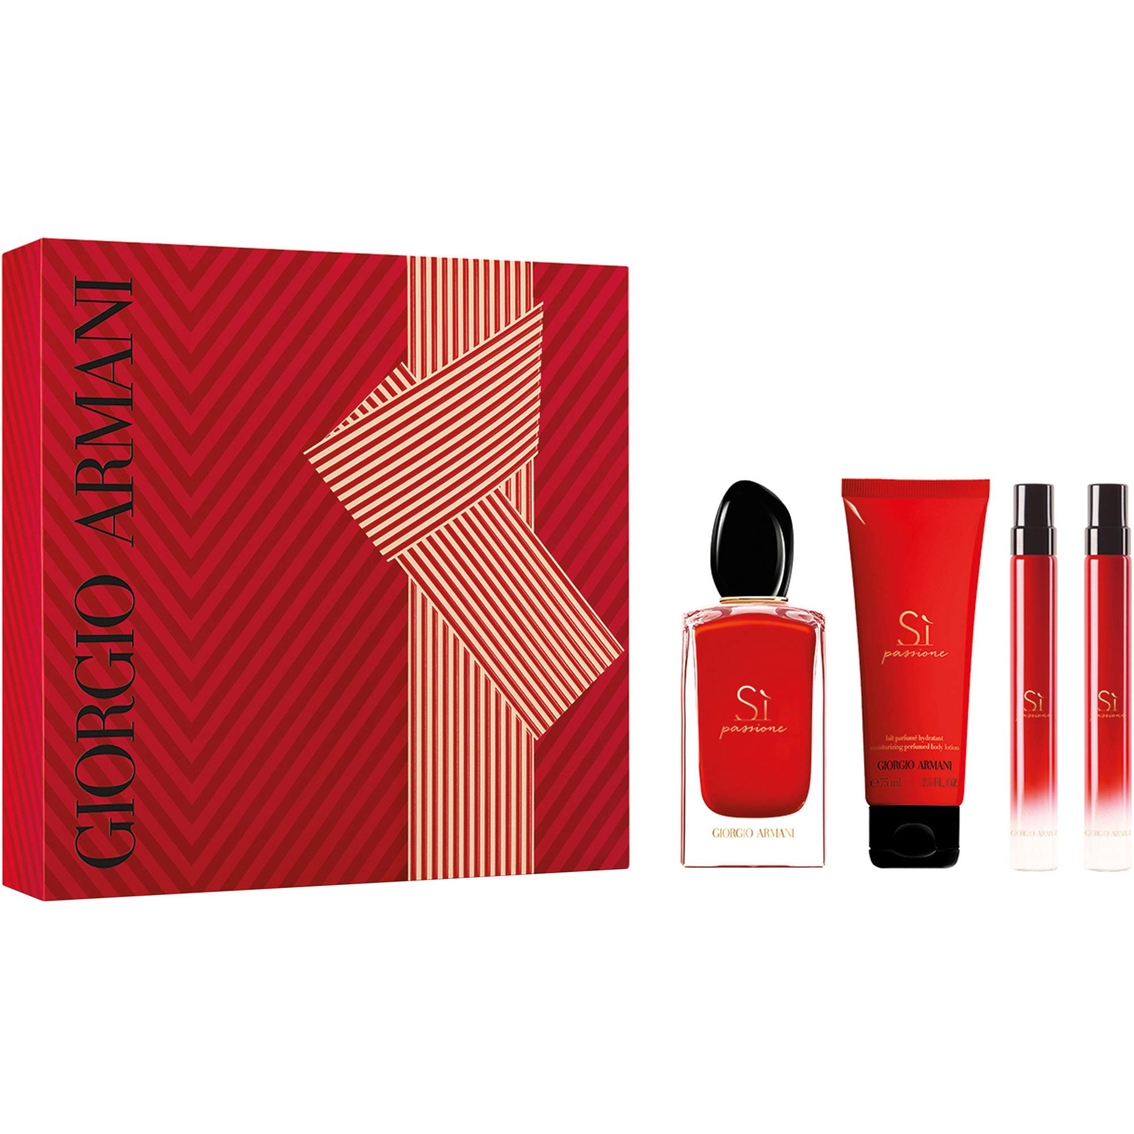 Giorgio Armani Si Passione Eau De Parfum 4 Pc Set Ts Sets For Her Beauty And Health Shop